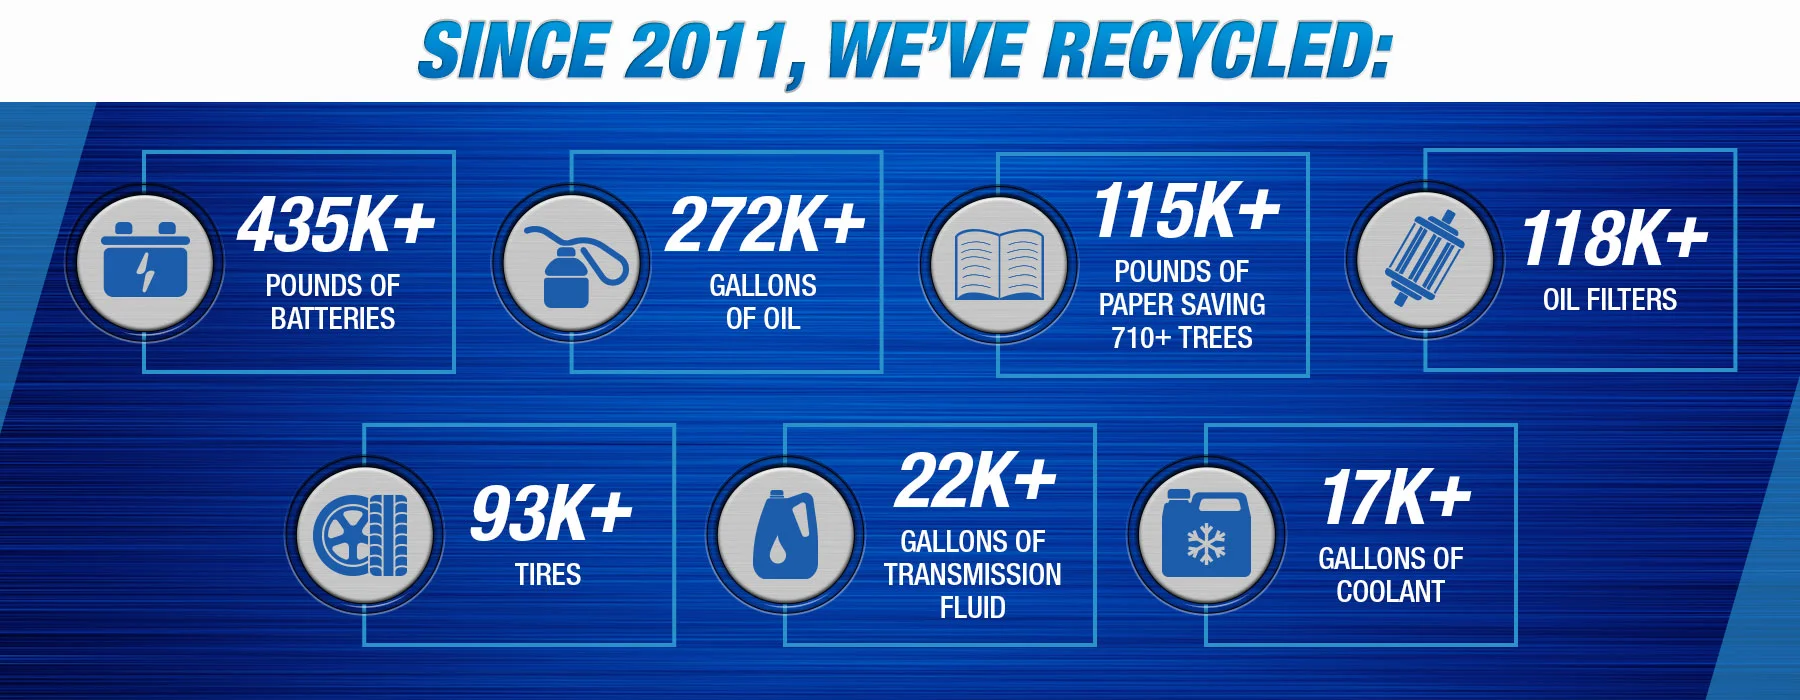 Infographic of Scholfield Honda's Environmental Achievements under the Leadership Program